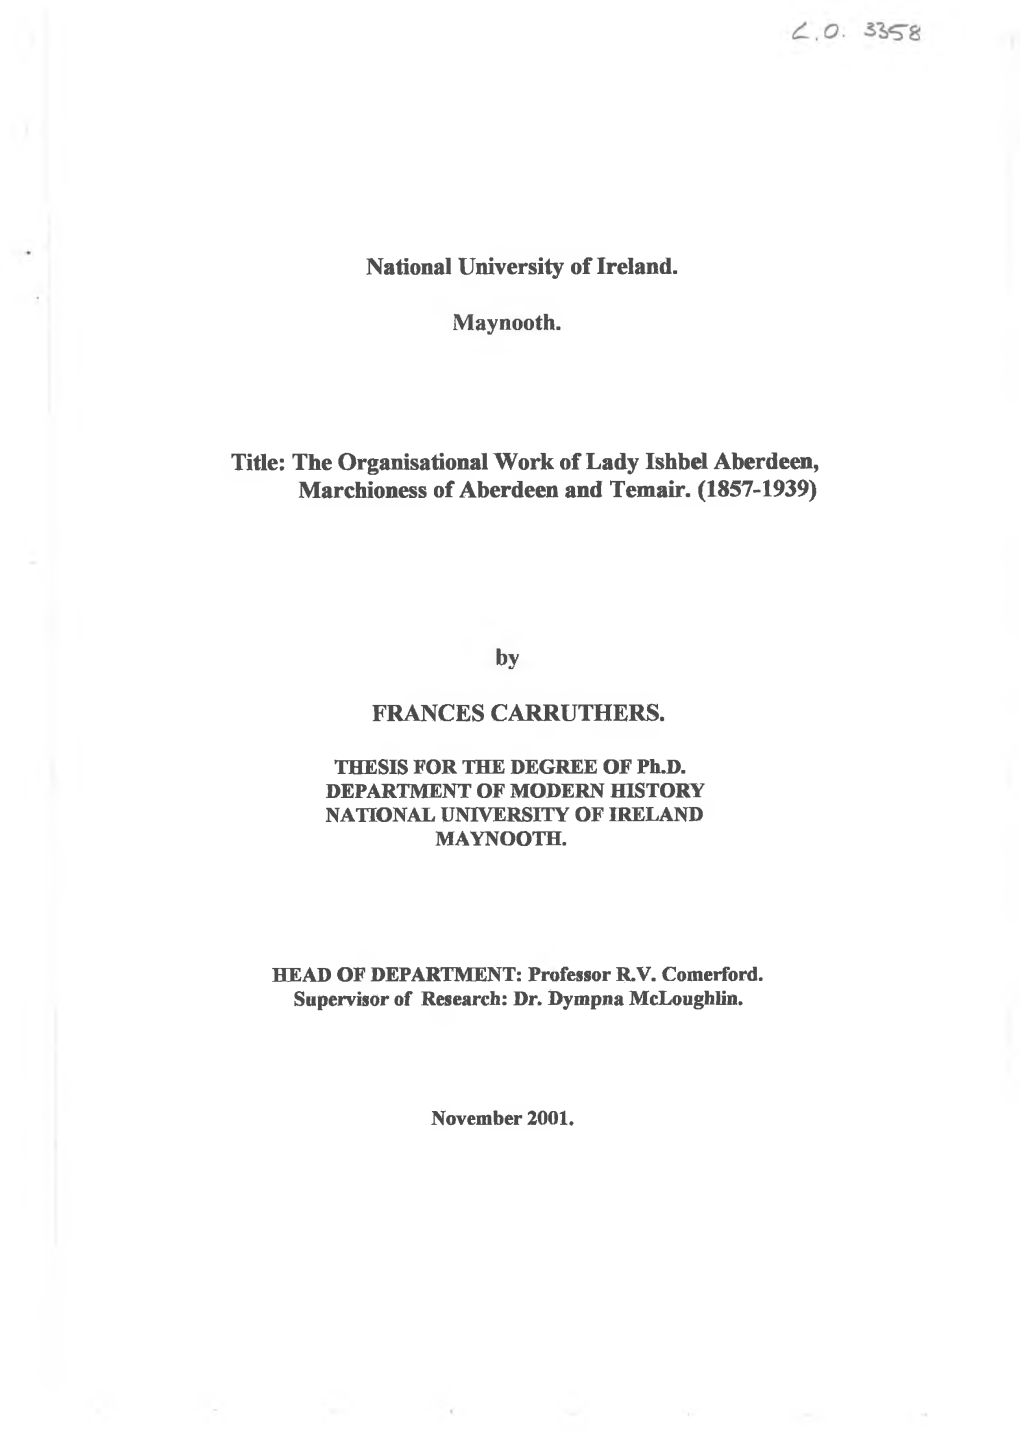 National University of Ireland. Maynooth. Title: the Organisational